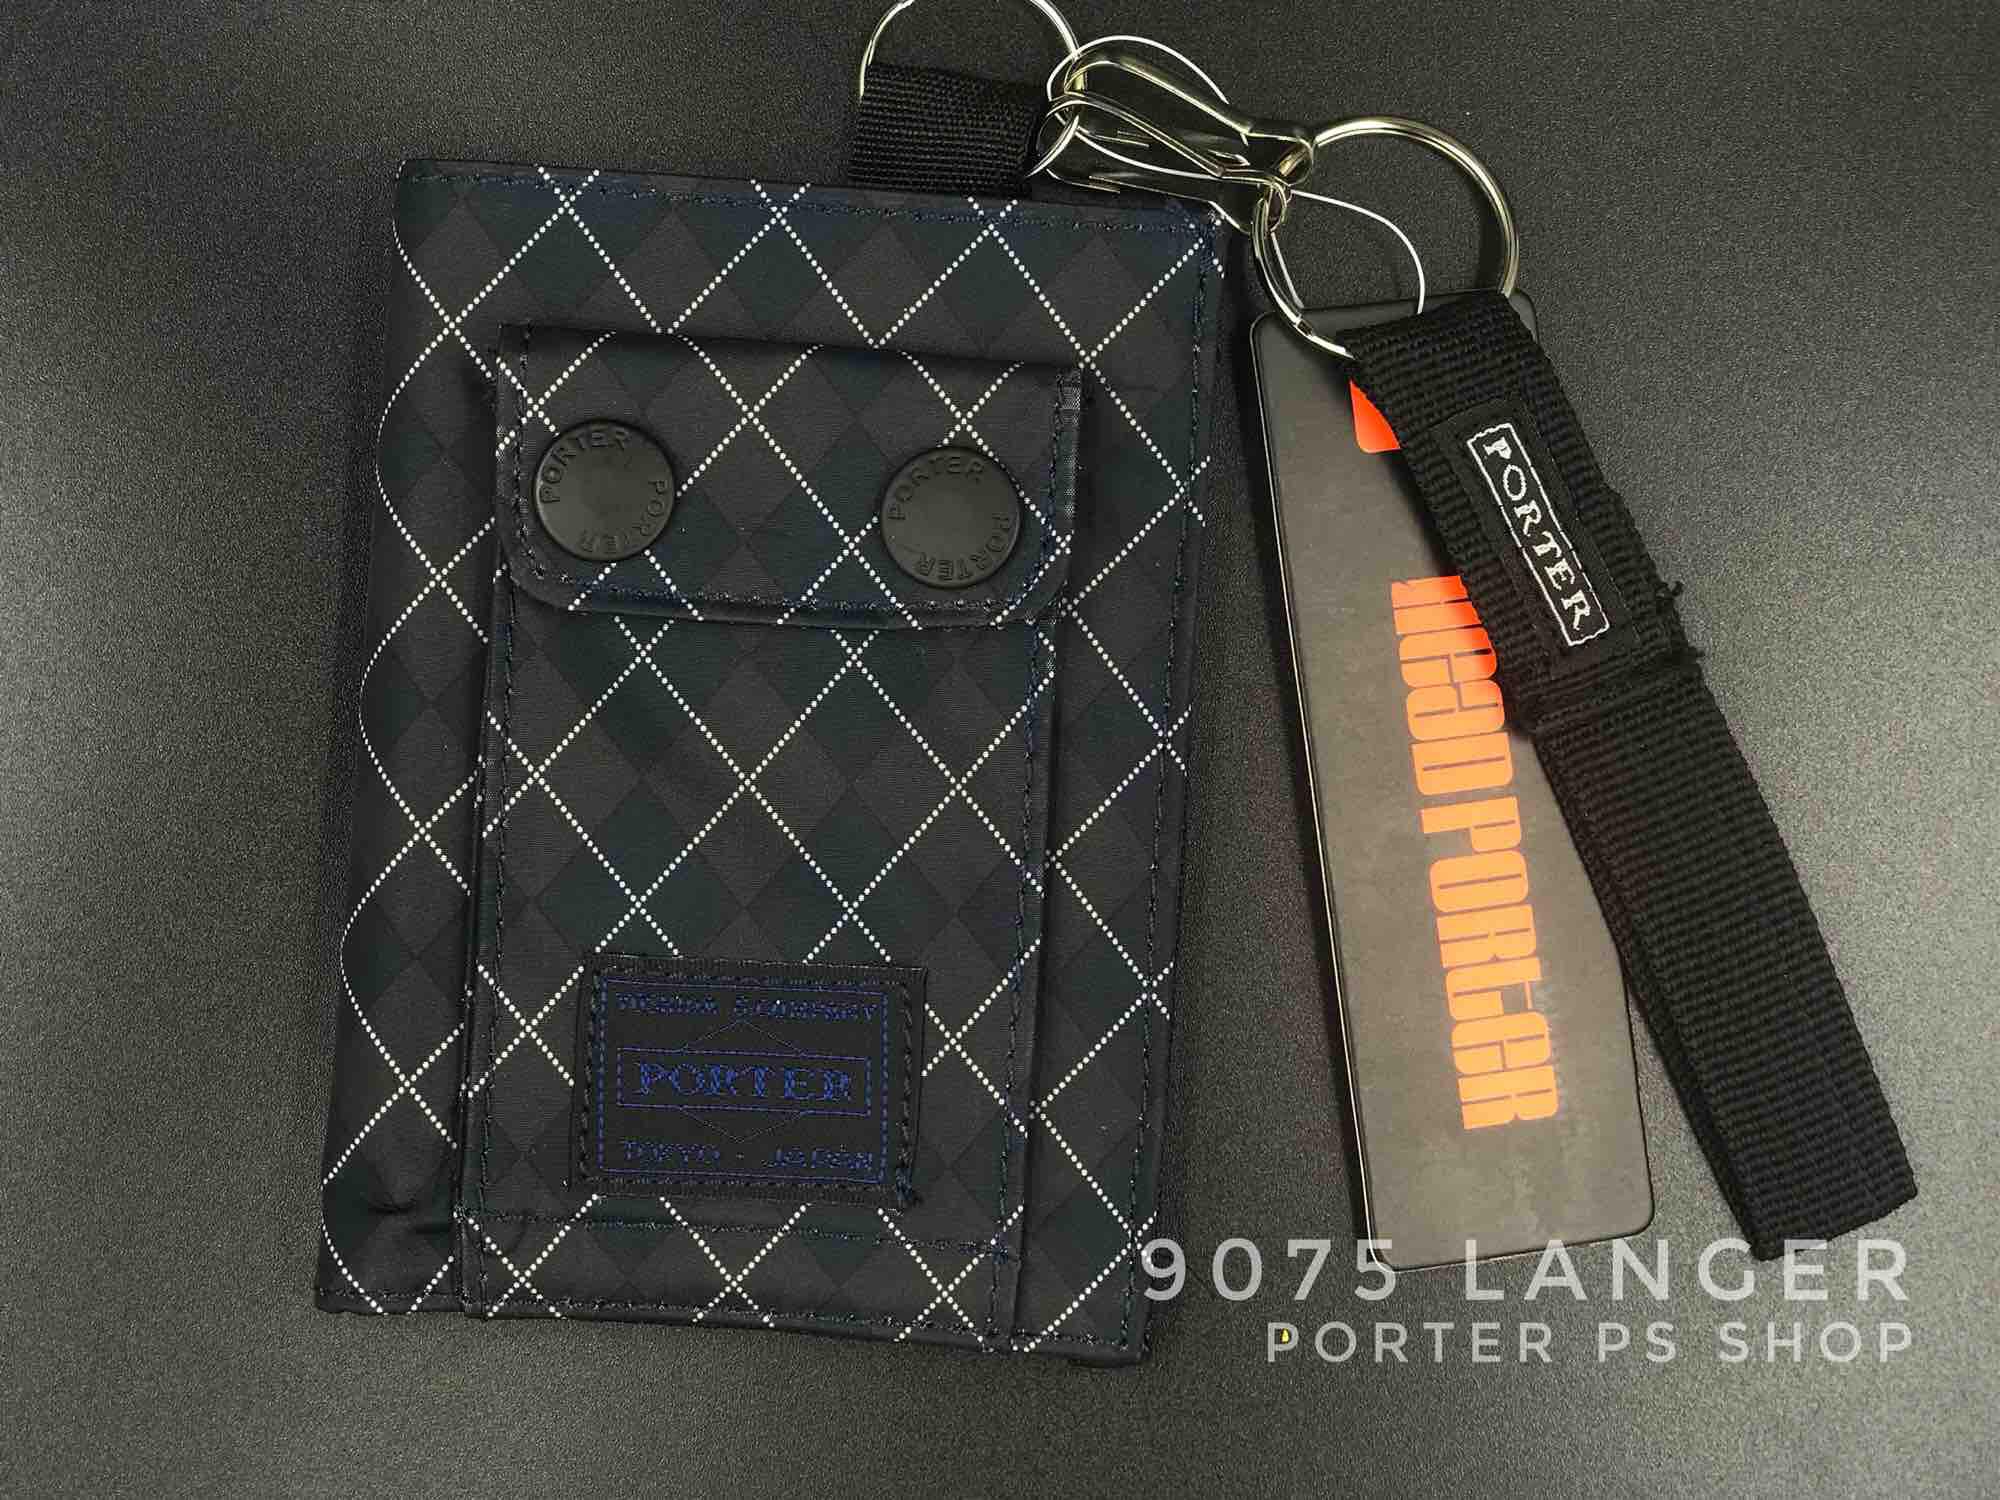 Porter Wallet 9075 Langer (ลายสก้อต) กระเป๋าสตางค์คุณภาพดี เรียบหรู แนวคลาสสิค